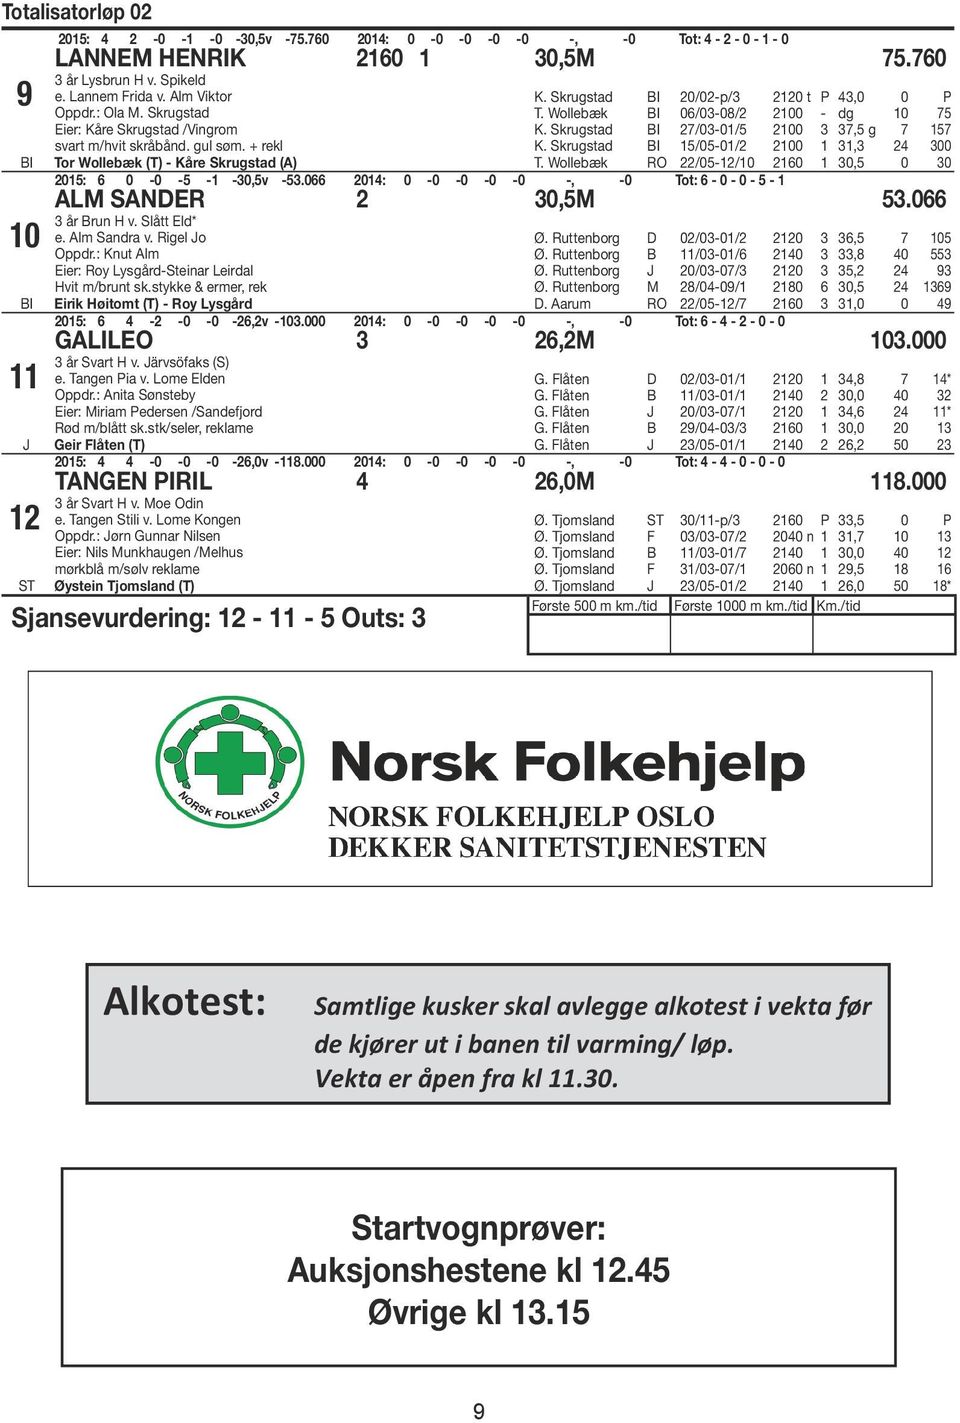 Wollebæk I 06/03-08/2 2100 - dg 10 75 K. Skrugstad I 27/03-01/5 2100 3 37,5 g 7 157 K. Skrugstad I 15/05-01/2 2100 1 31,3 24 300 T.